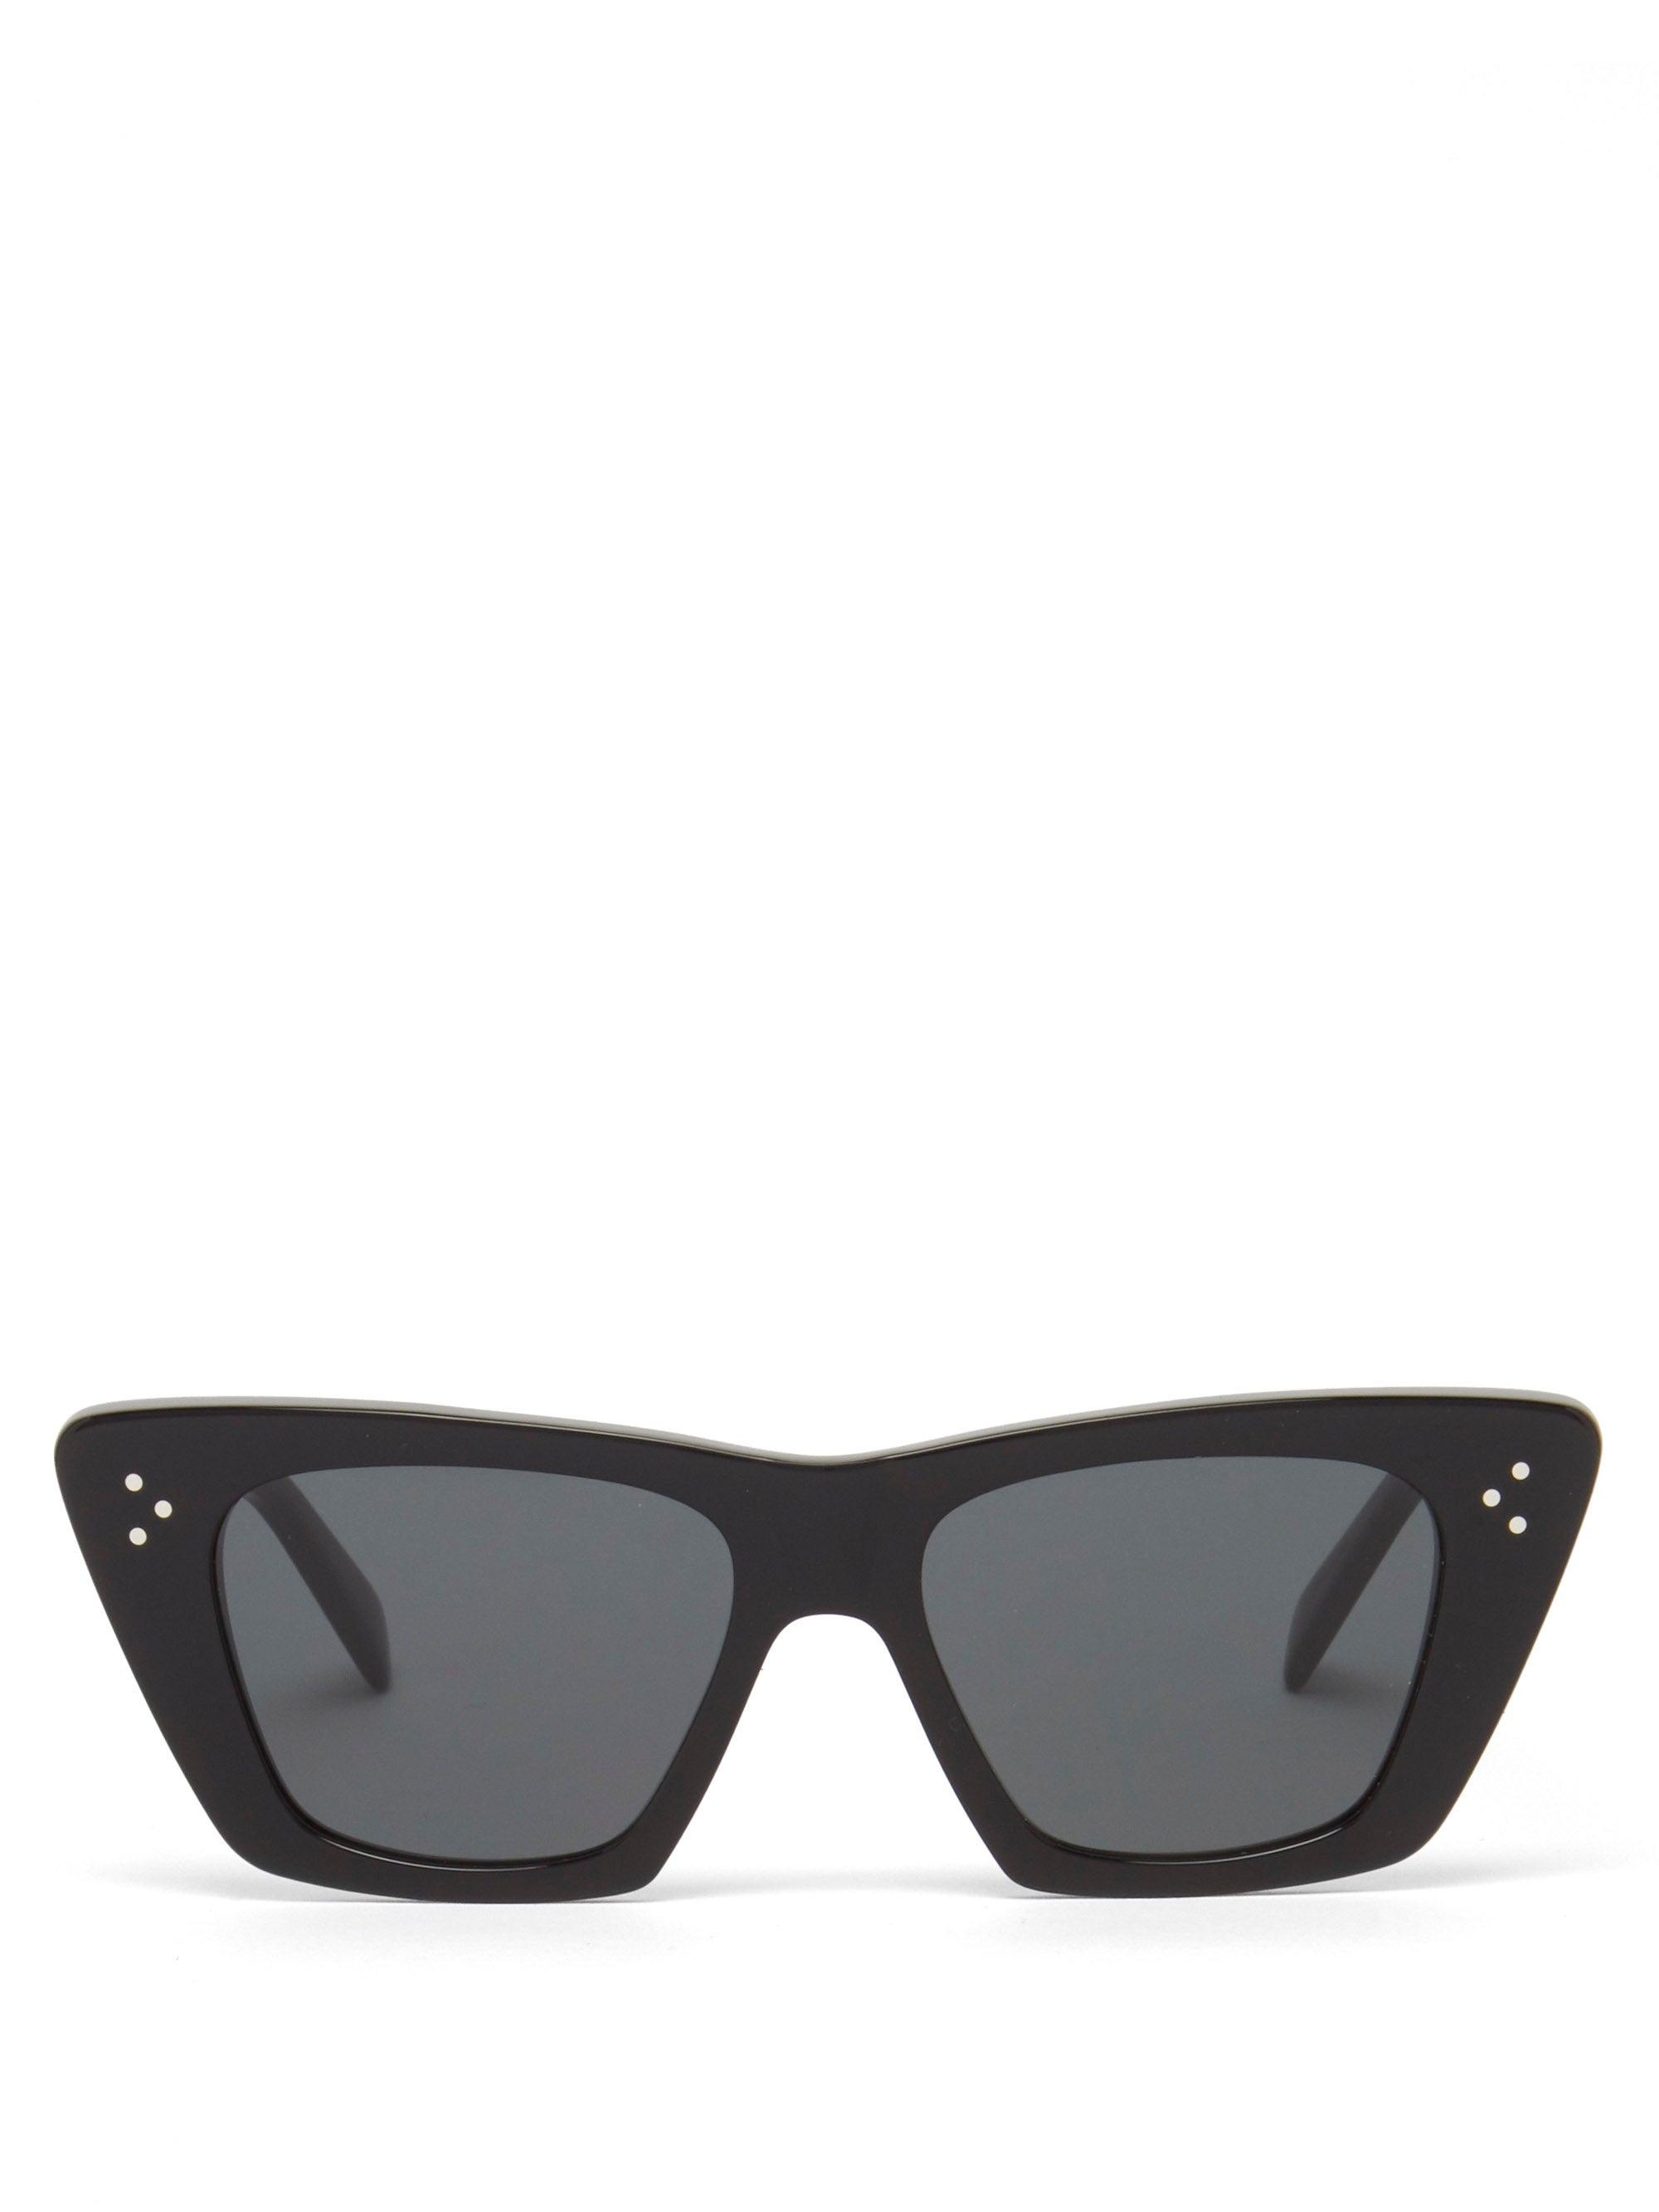 Celine Cat-eye Acetate Sunglasses in Black - Lyst